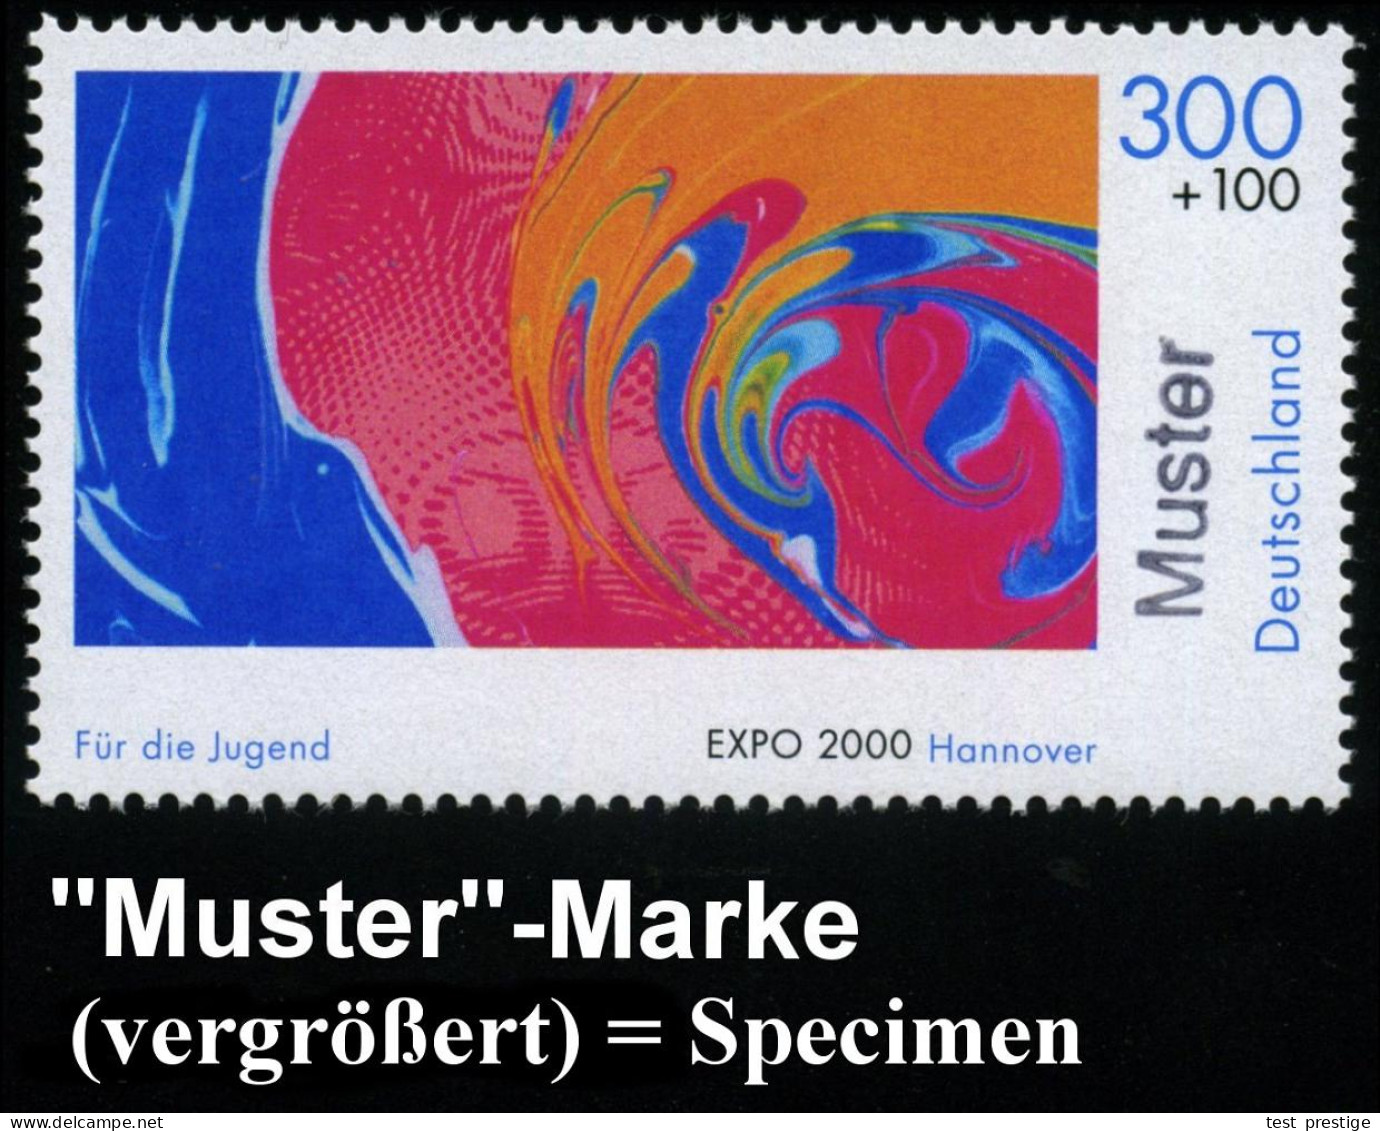 B.R.D. 2000 (Juni) "Jugend auf der EXPO 2000" (Hannover) kompl. Satz, jede Marke mit amtl. Handstempel  "M u s t e r" , 